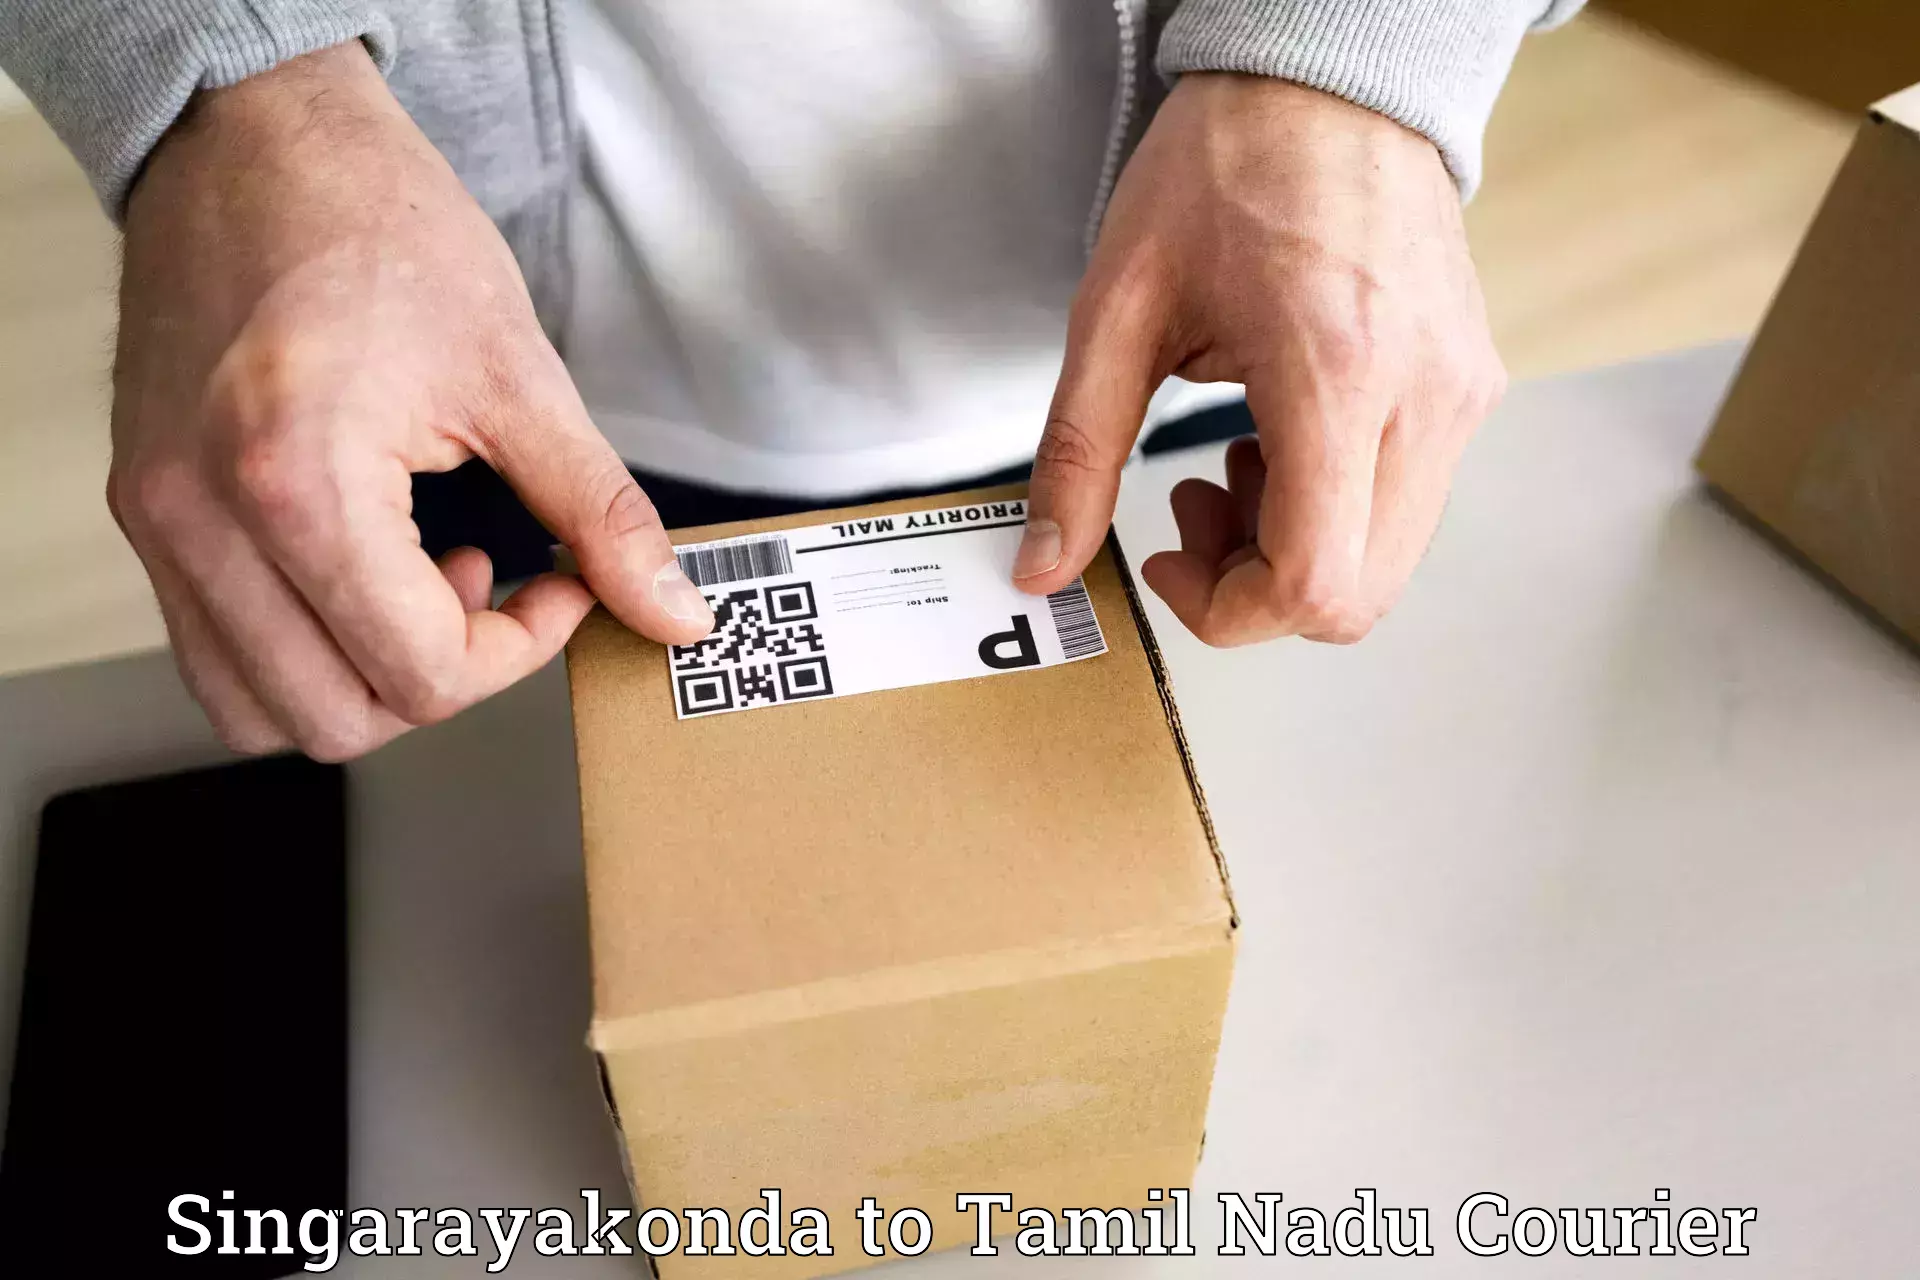 Local delivery service Singarayakonda to Tamil Nadu